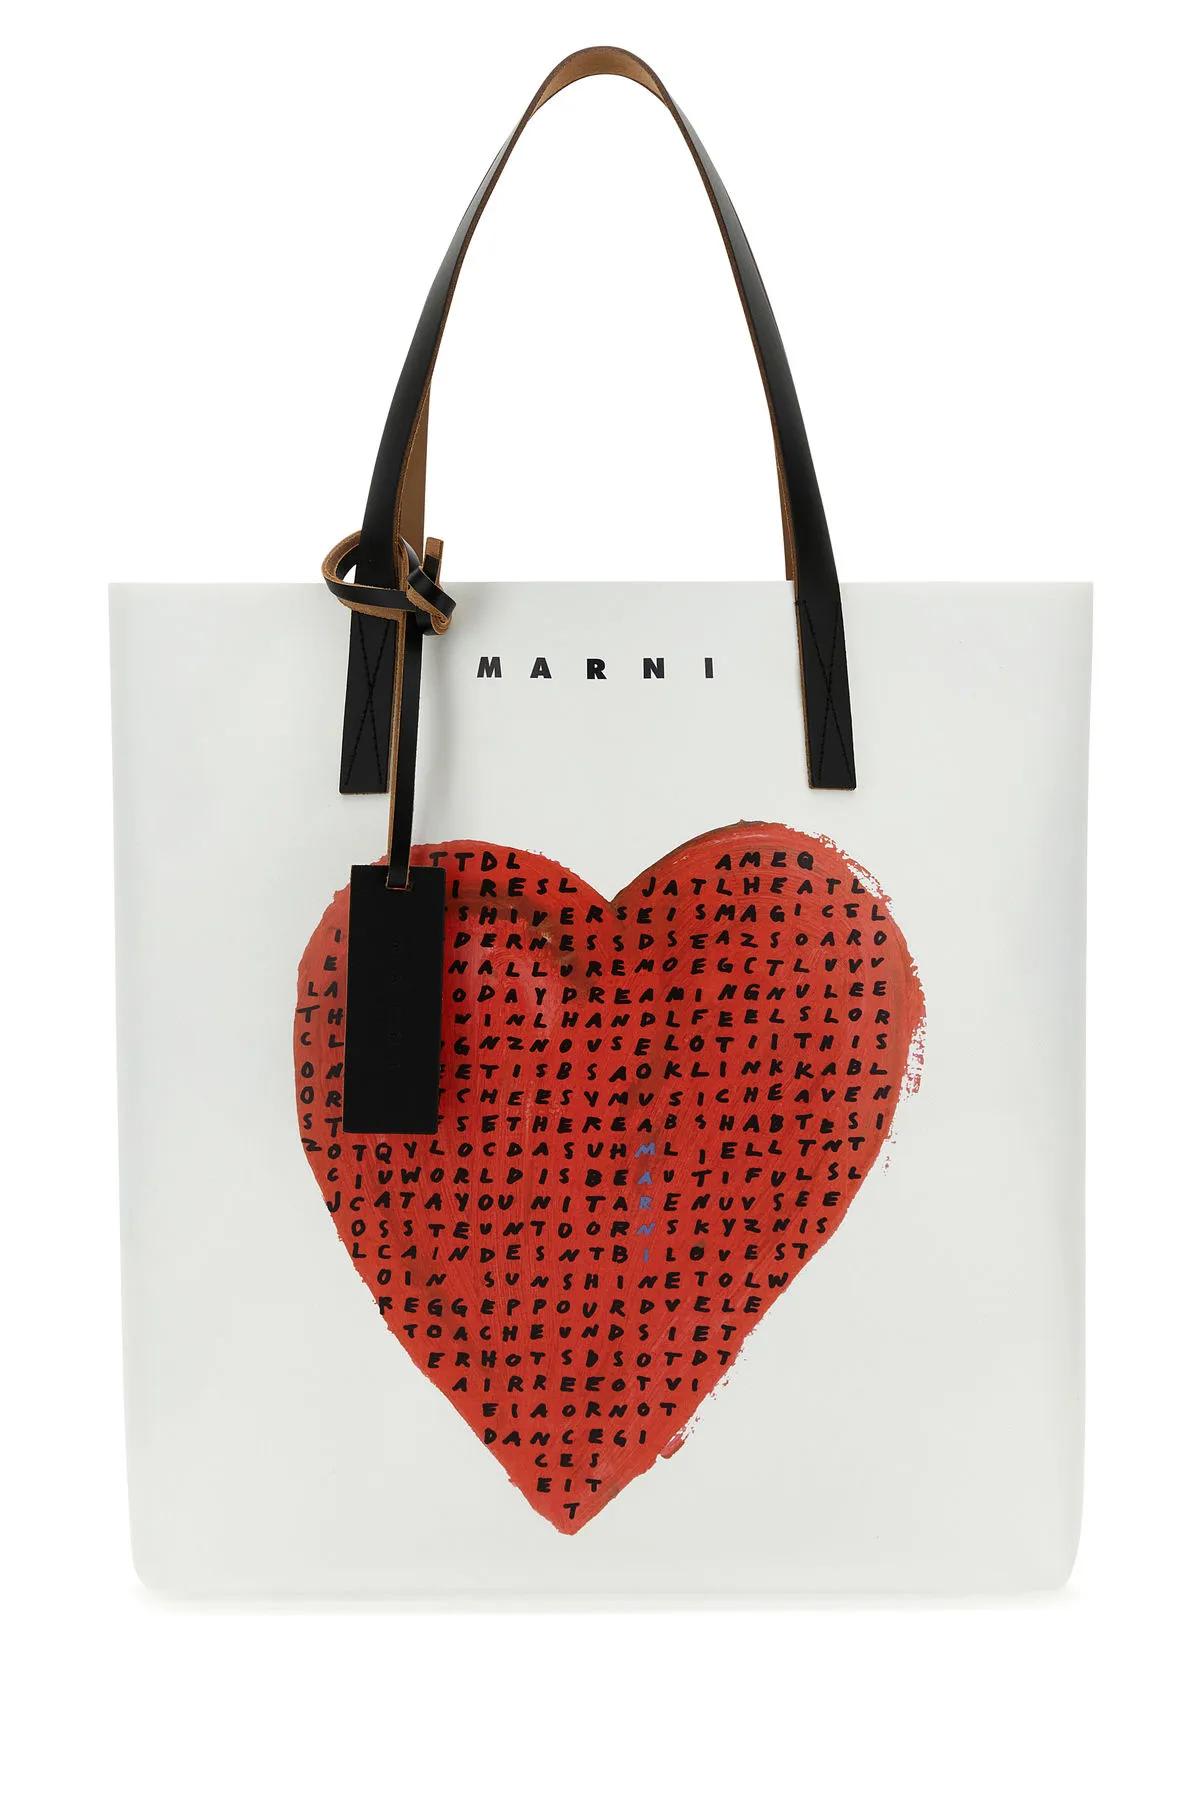 Marni Two-Tone Pvc Shopping Bag